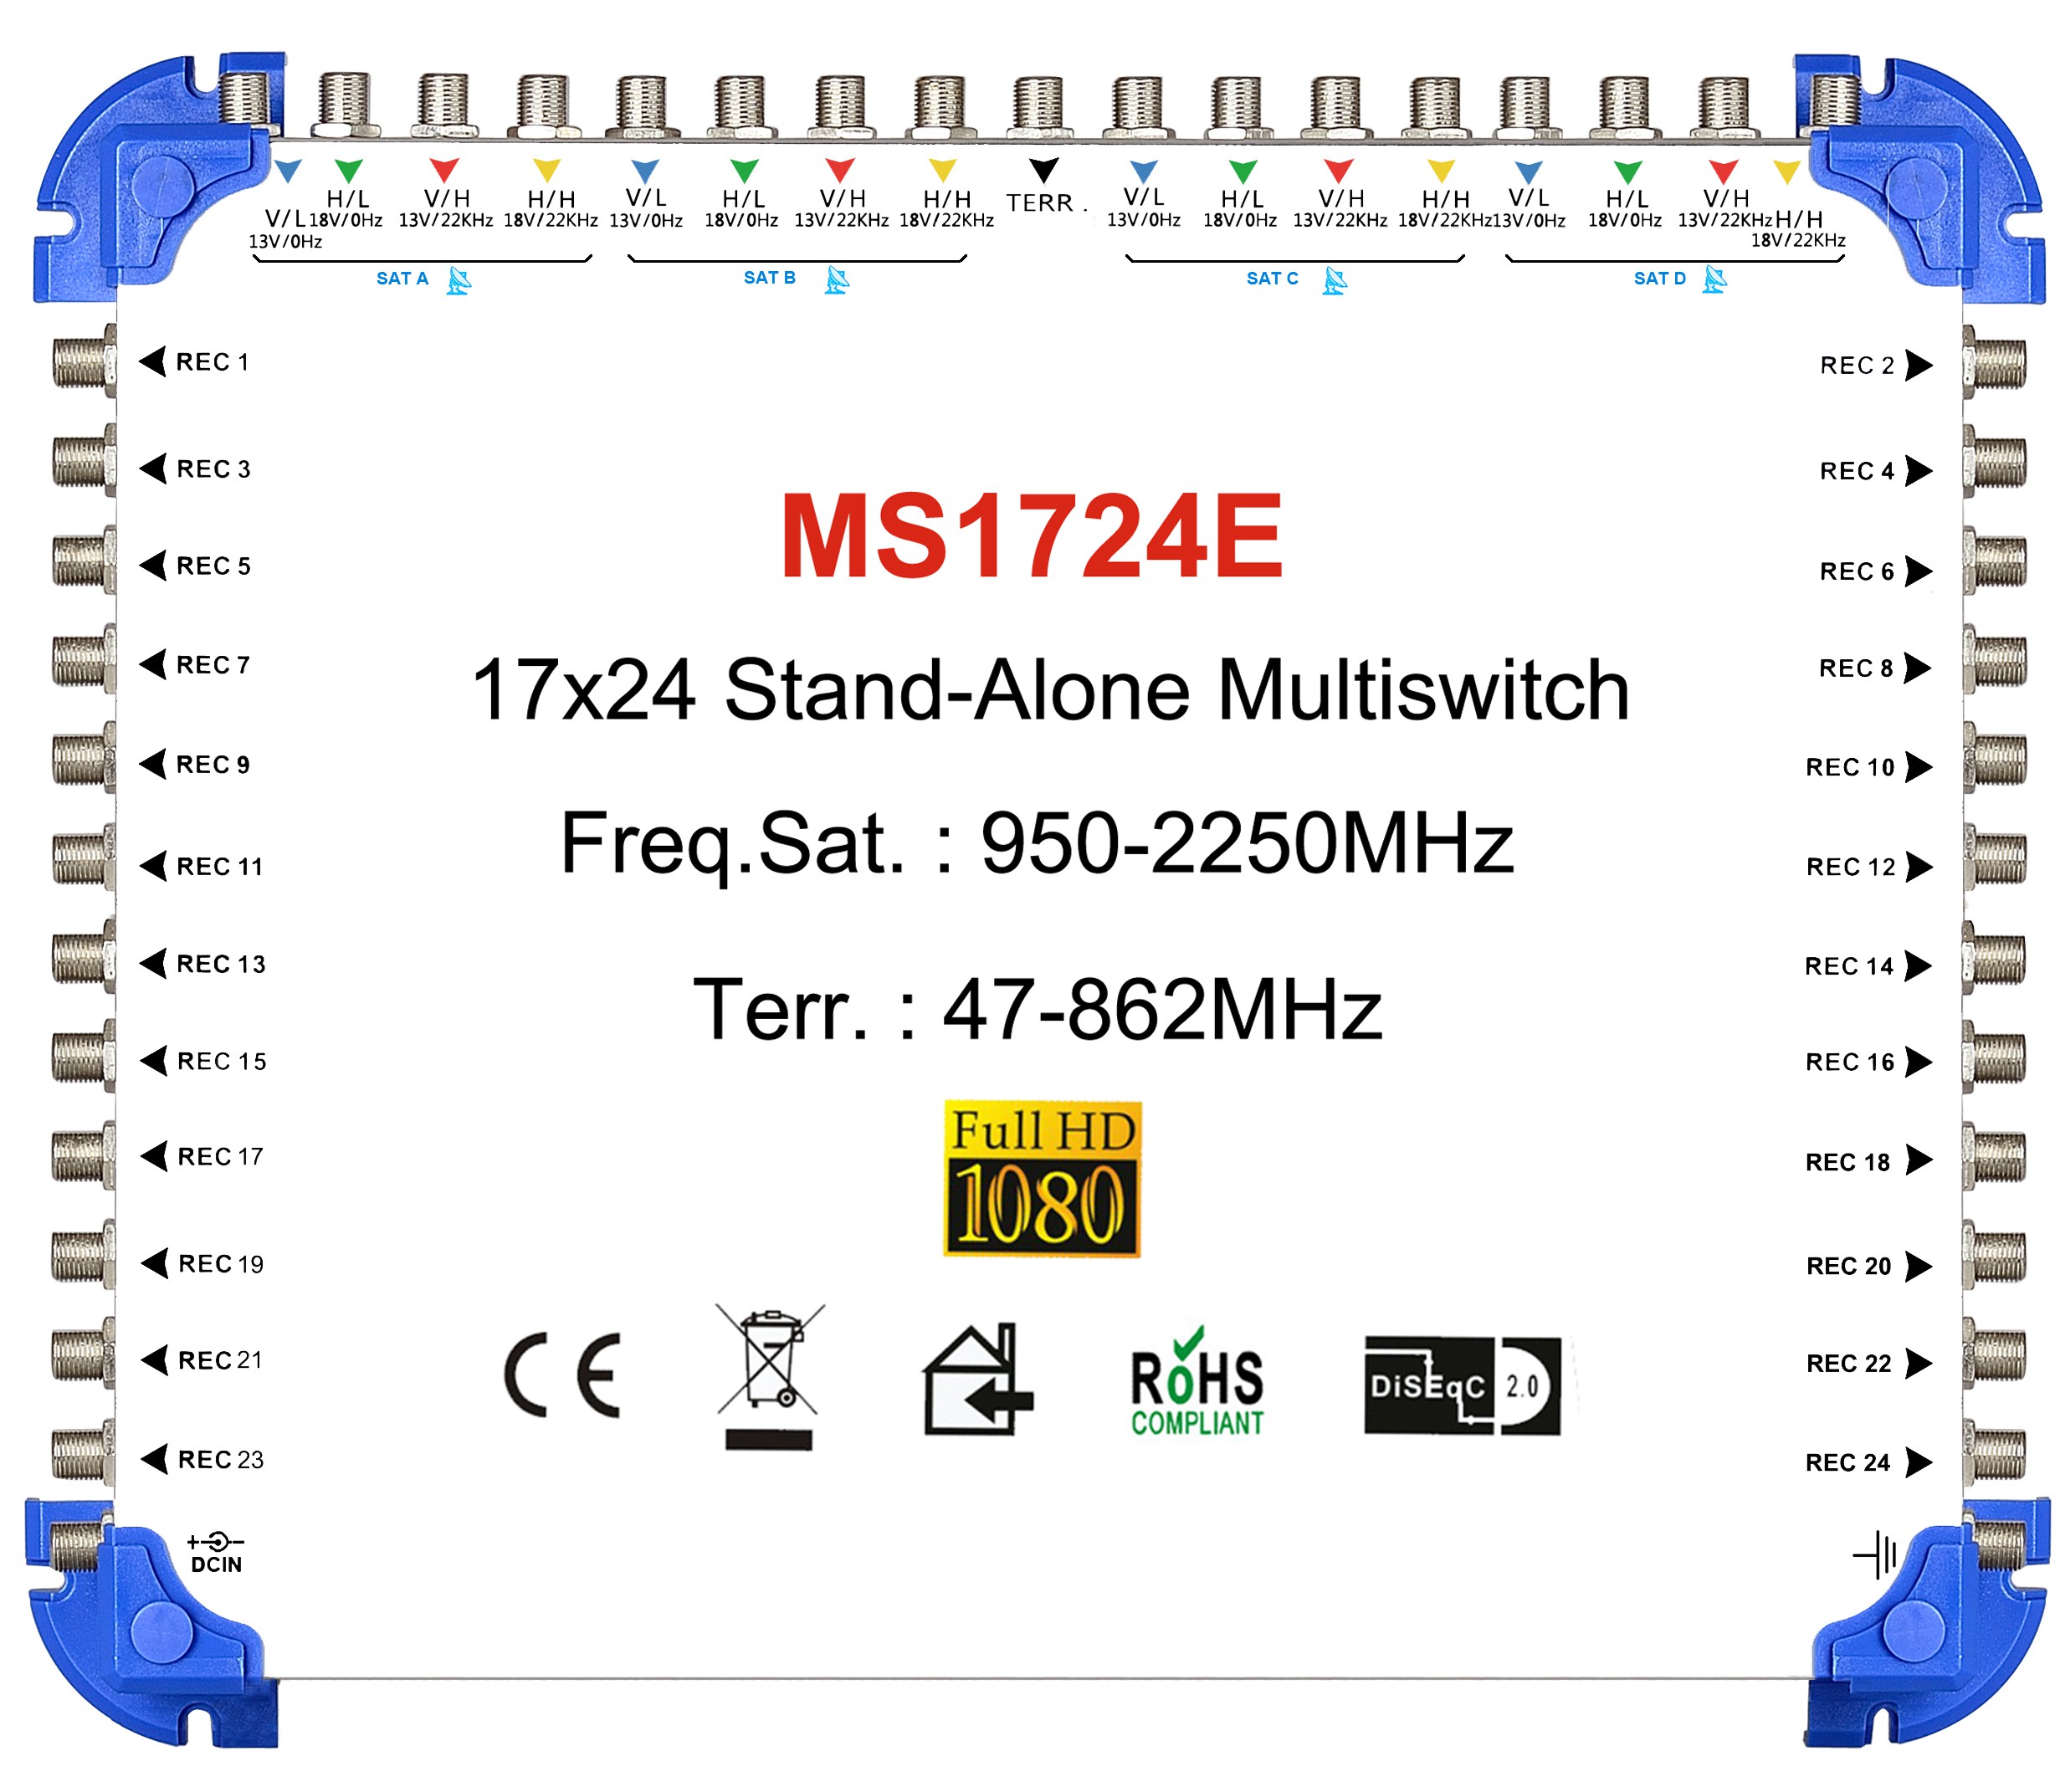 17x24 satellite multi-switch, Stand-Alone multiswitch